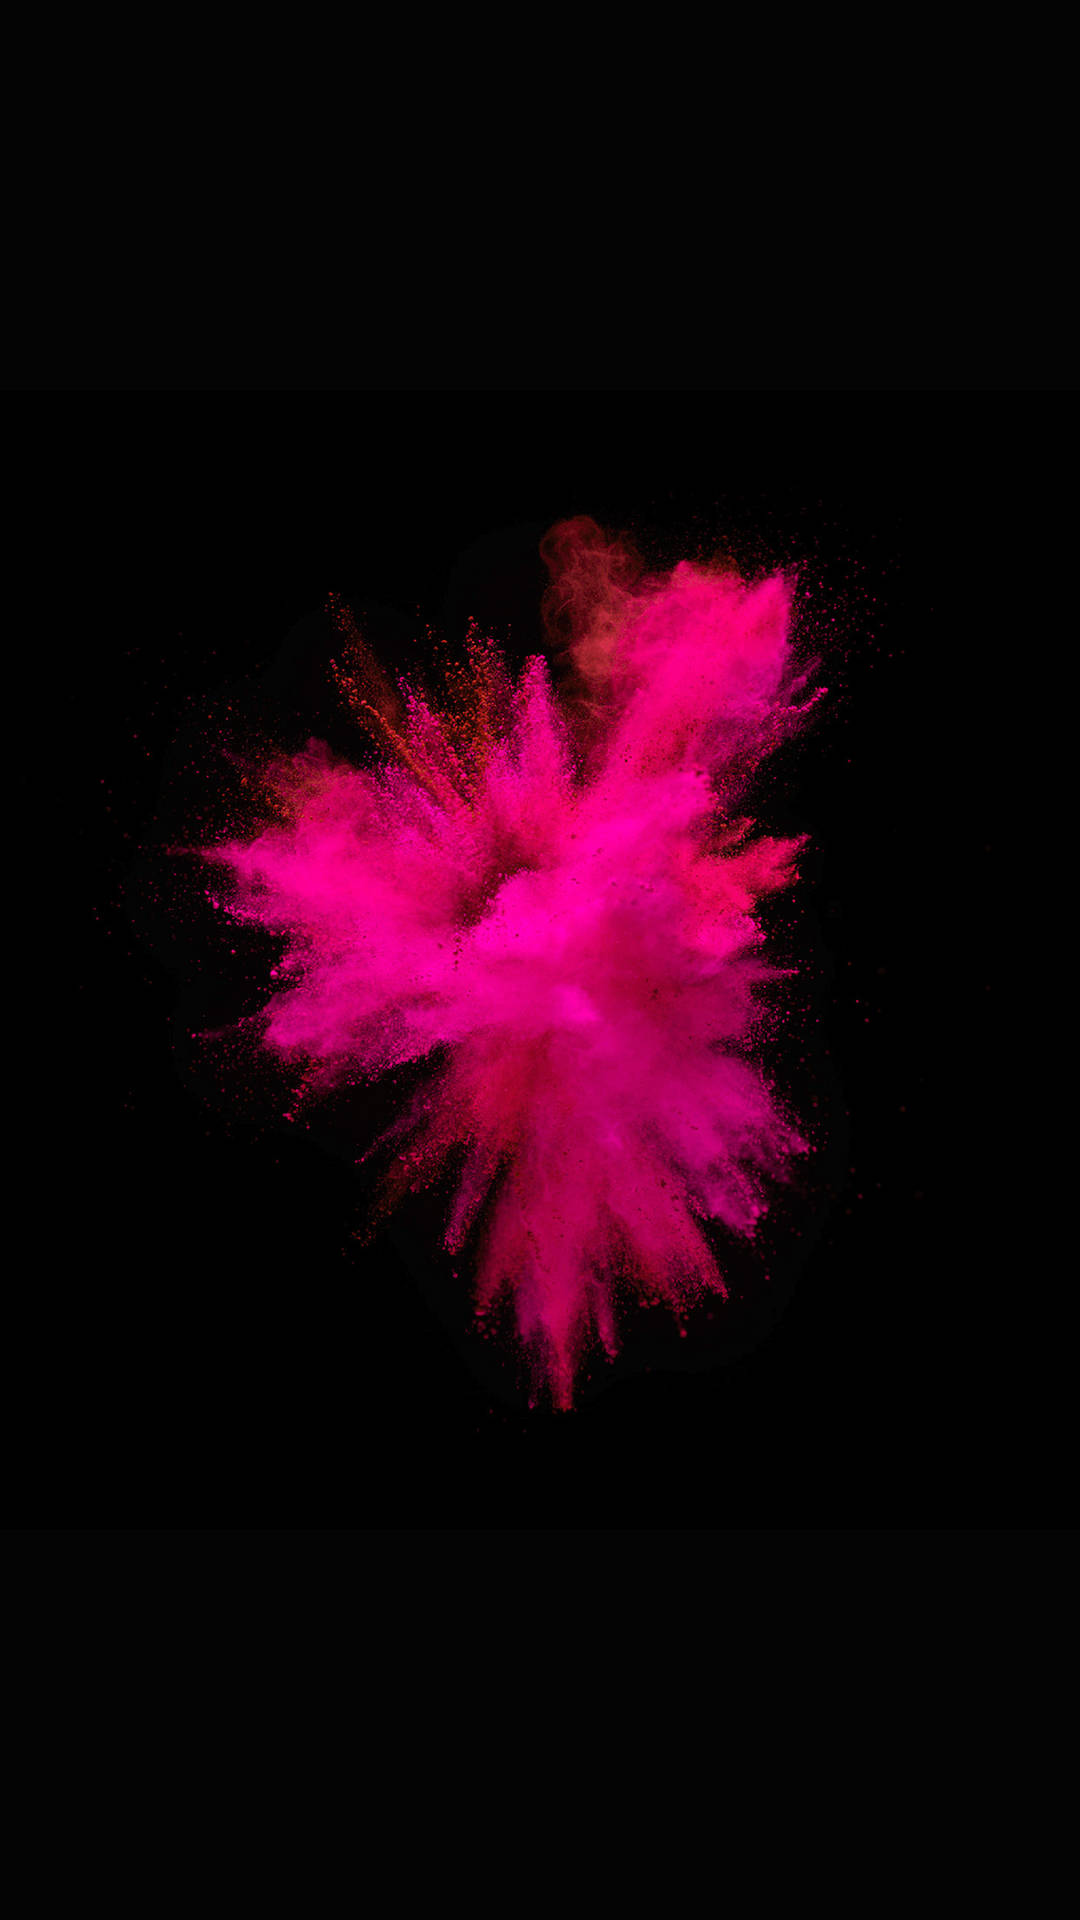 Iphone X Original Pink Powder Explosion Wallpaper